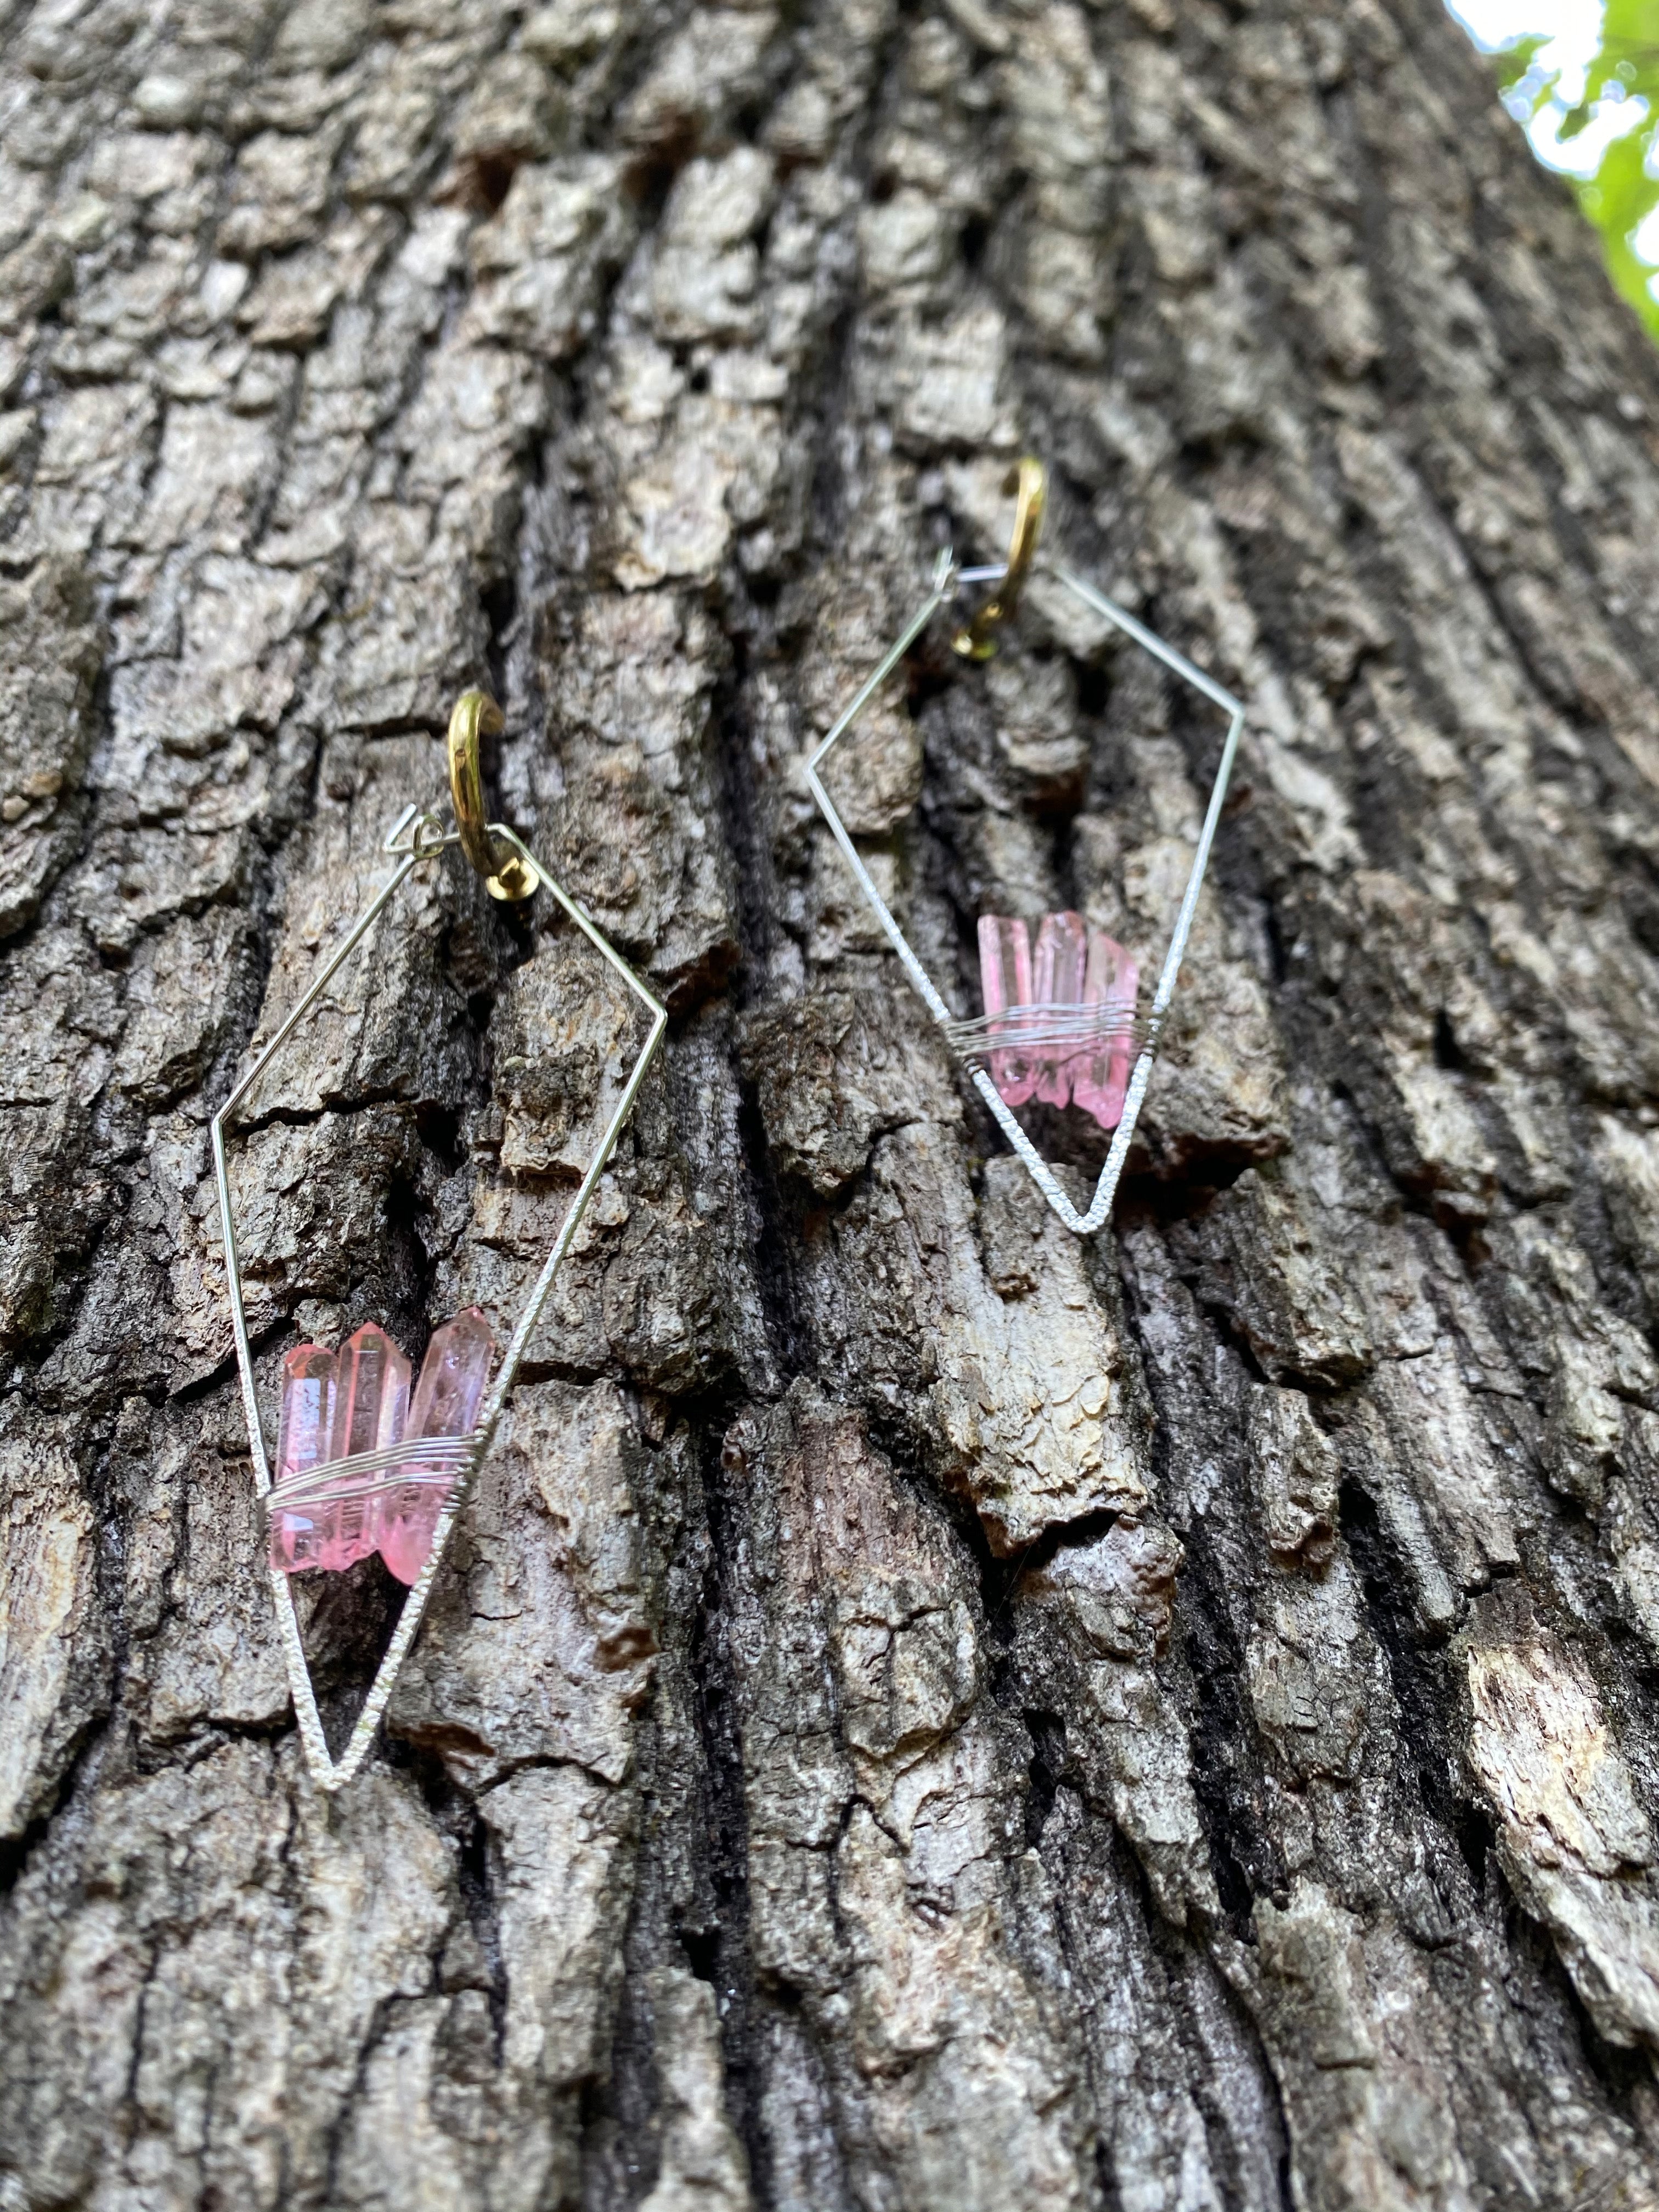 "The Magnolias" Pink Quartz Earrings